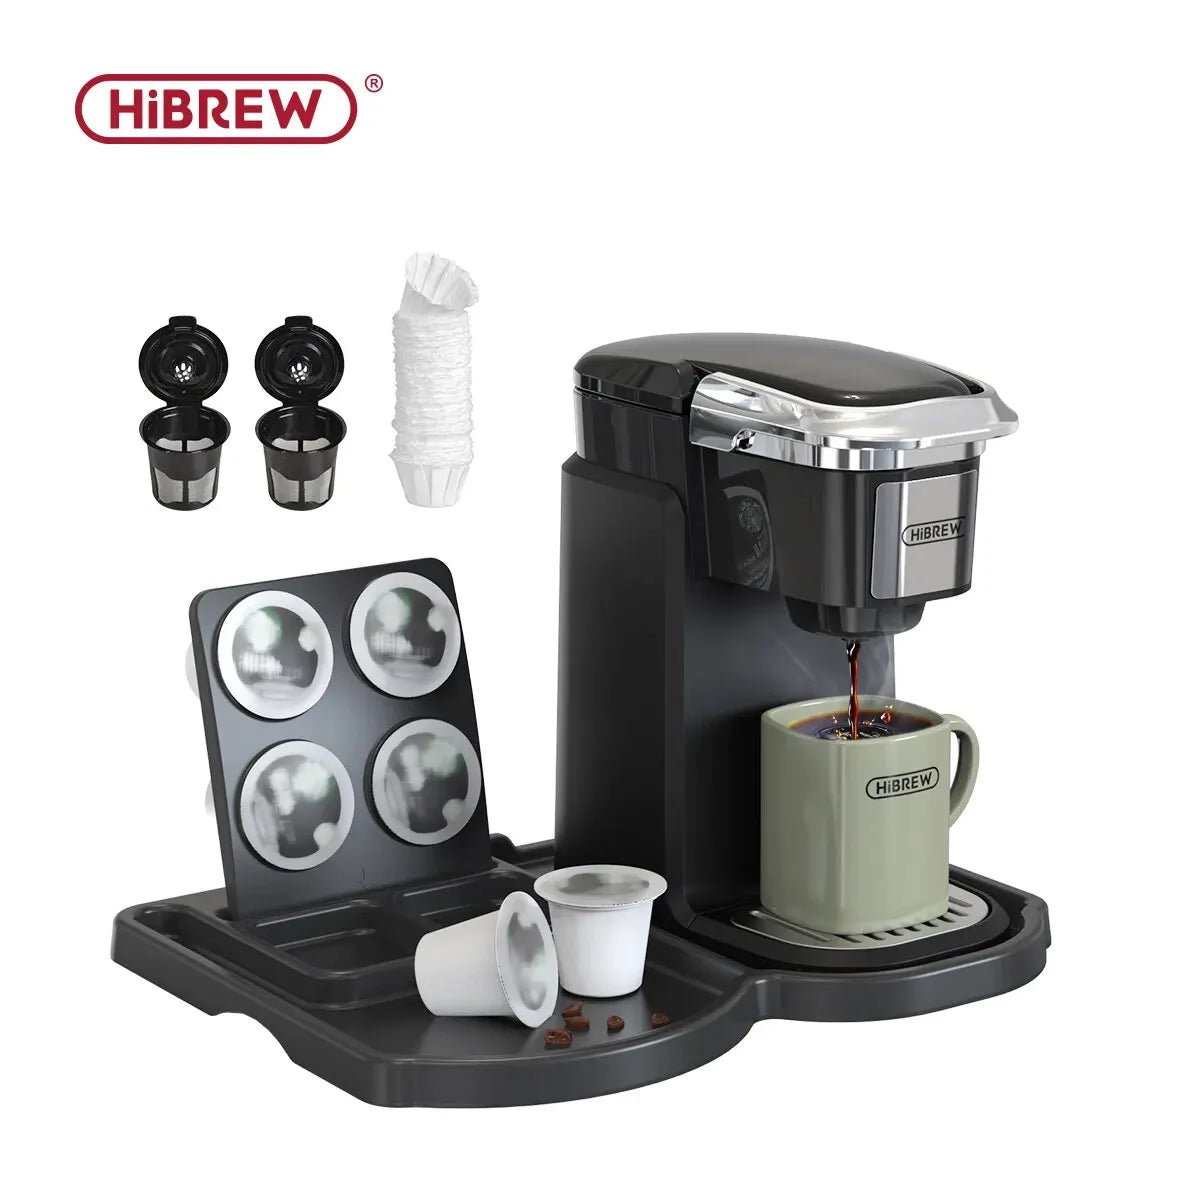 HiBREW Filter Coffee Machine Brewer
K-Cup Capsule& Ground Coffee
Tea Maker Hot Water Dispenser
Single Serve Coffee Maker.